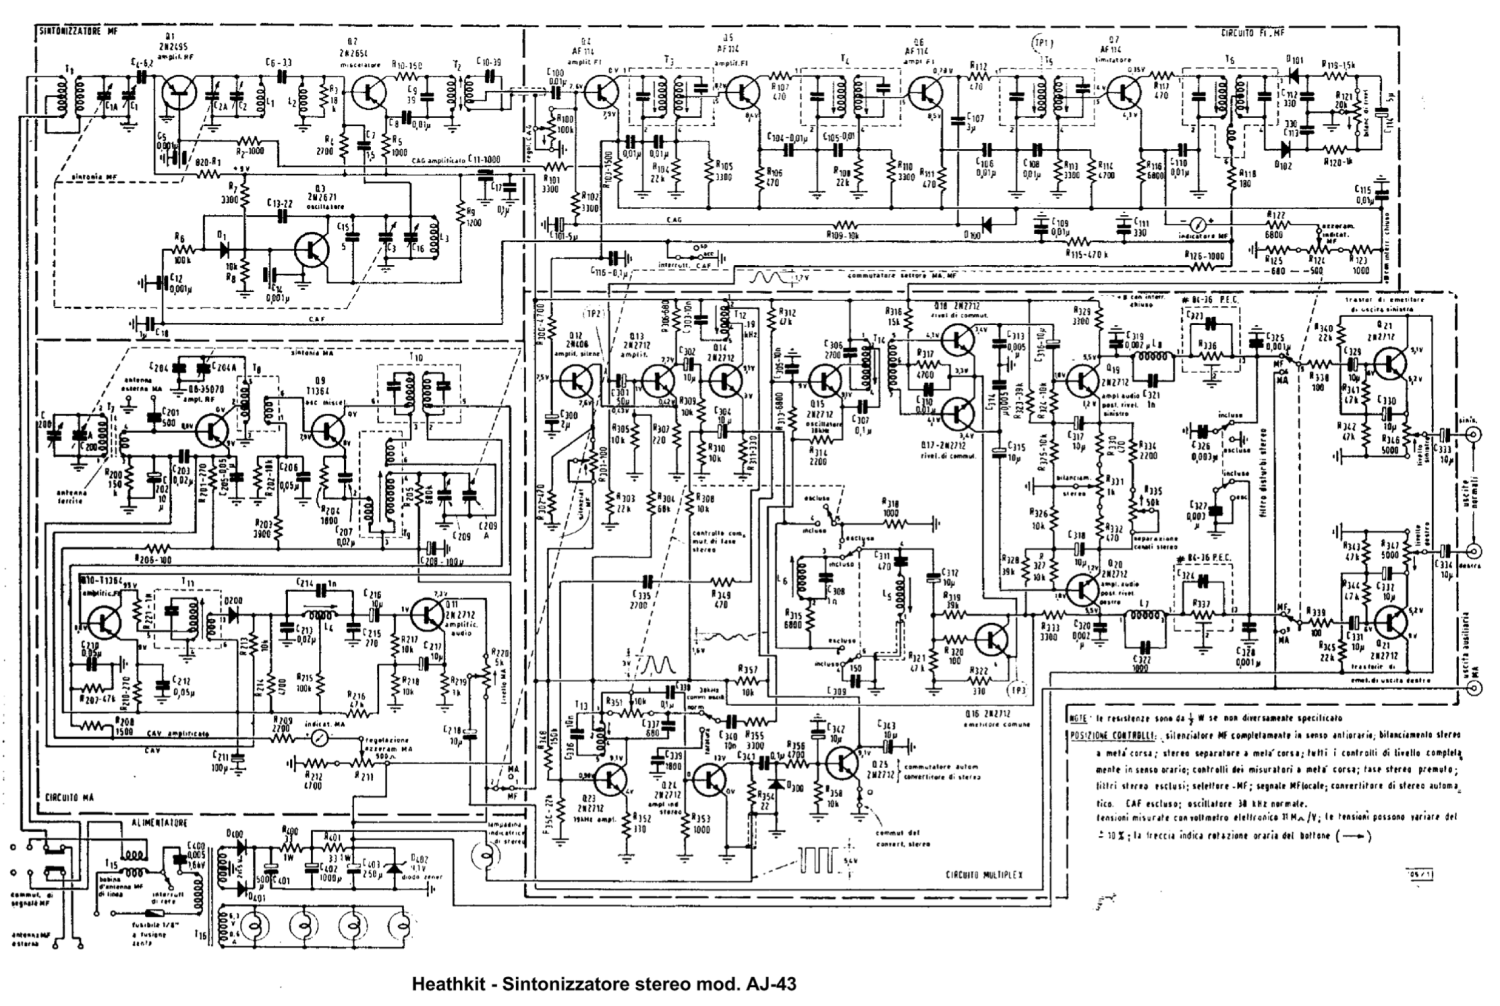 Heathkit AJ-43 Stereo Tuner - Schematic Diagram